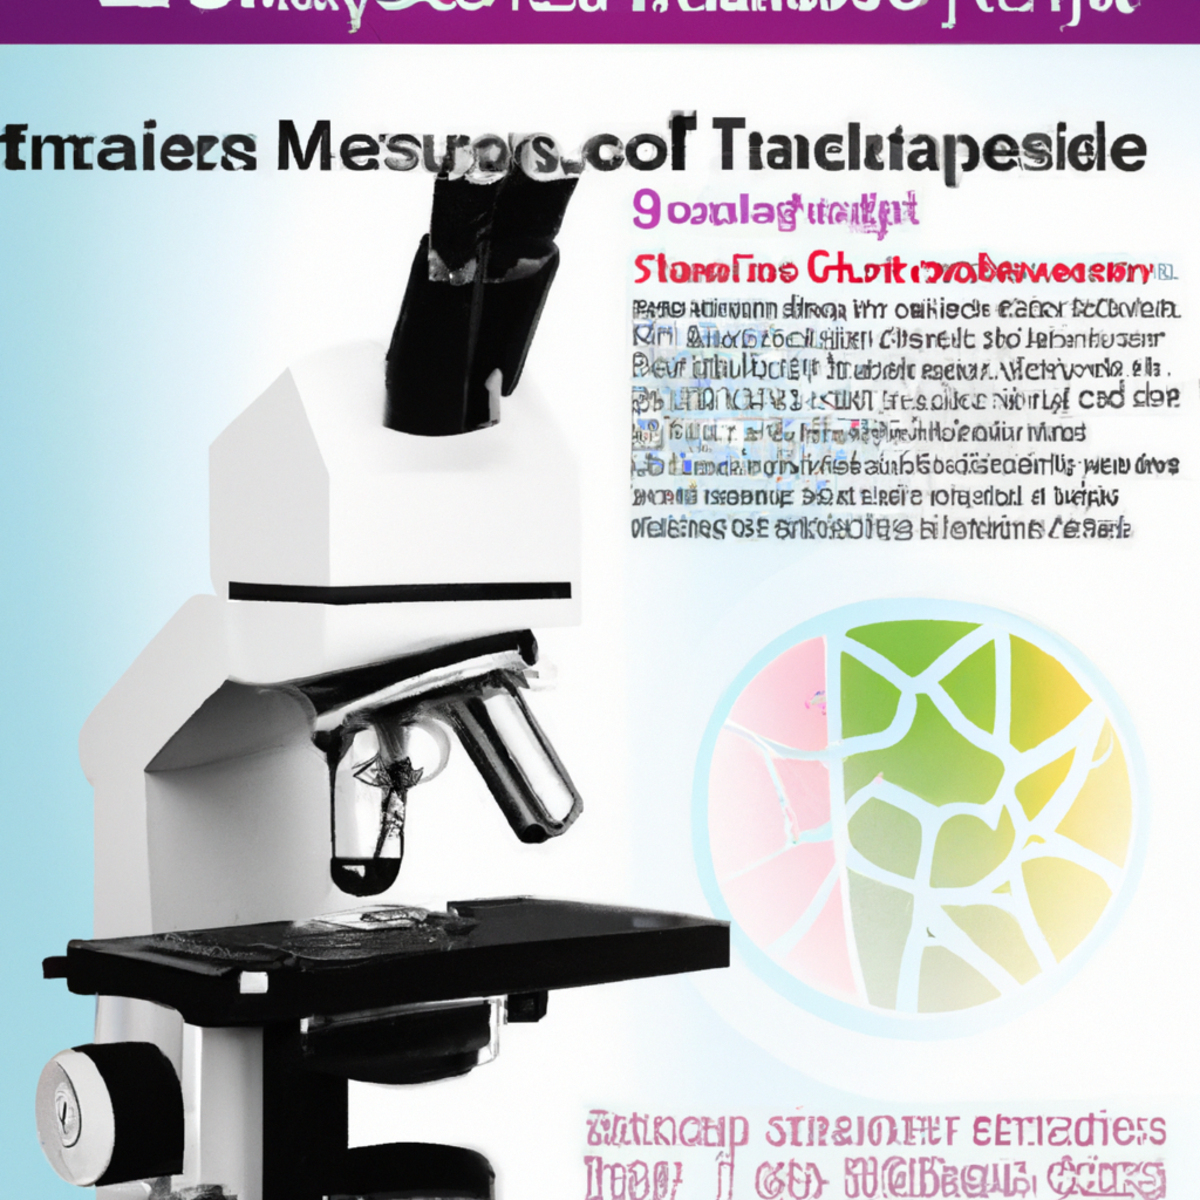 Cutting-edge lab with modern microscope focused on vibrant slide, symbolizing progress in Menetrier's disease treatments.